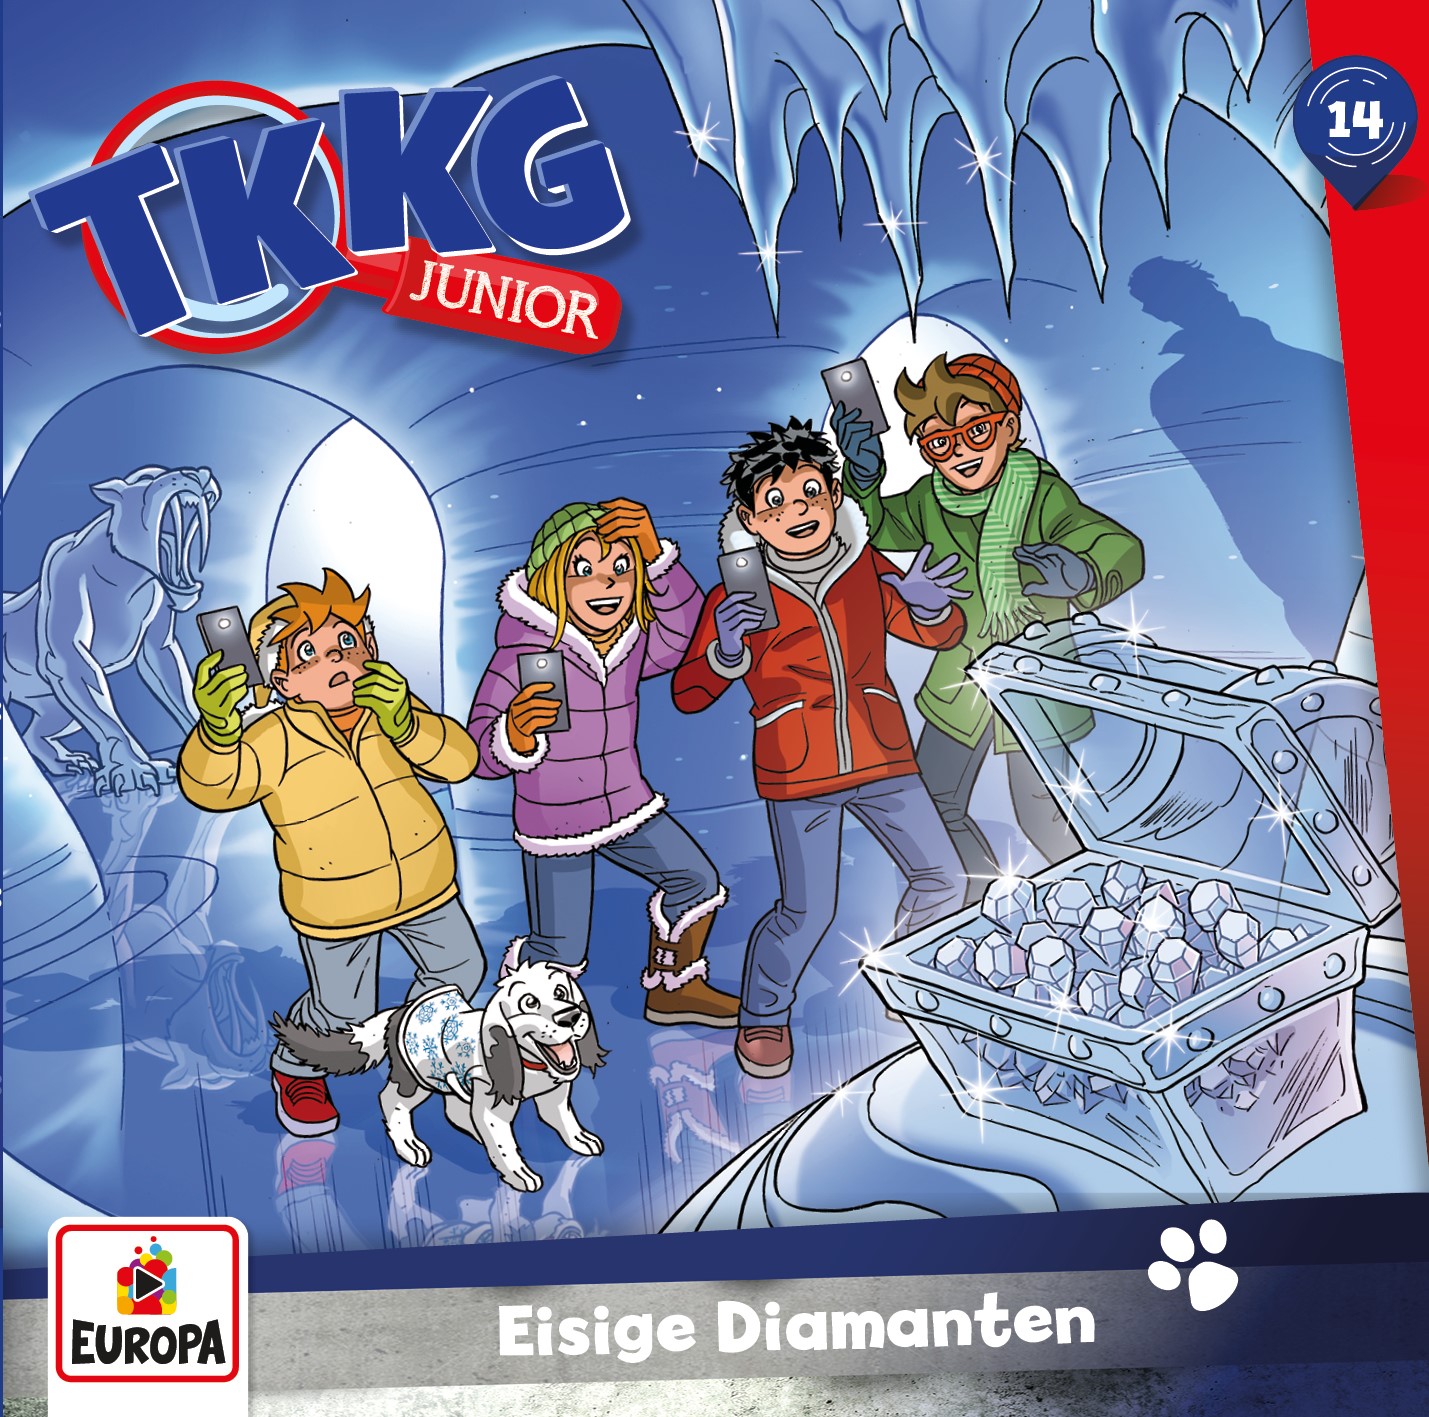 TKKG Junior Hörspiel-Folge 14: Eisige Diamanten